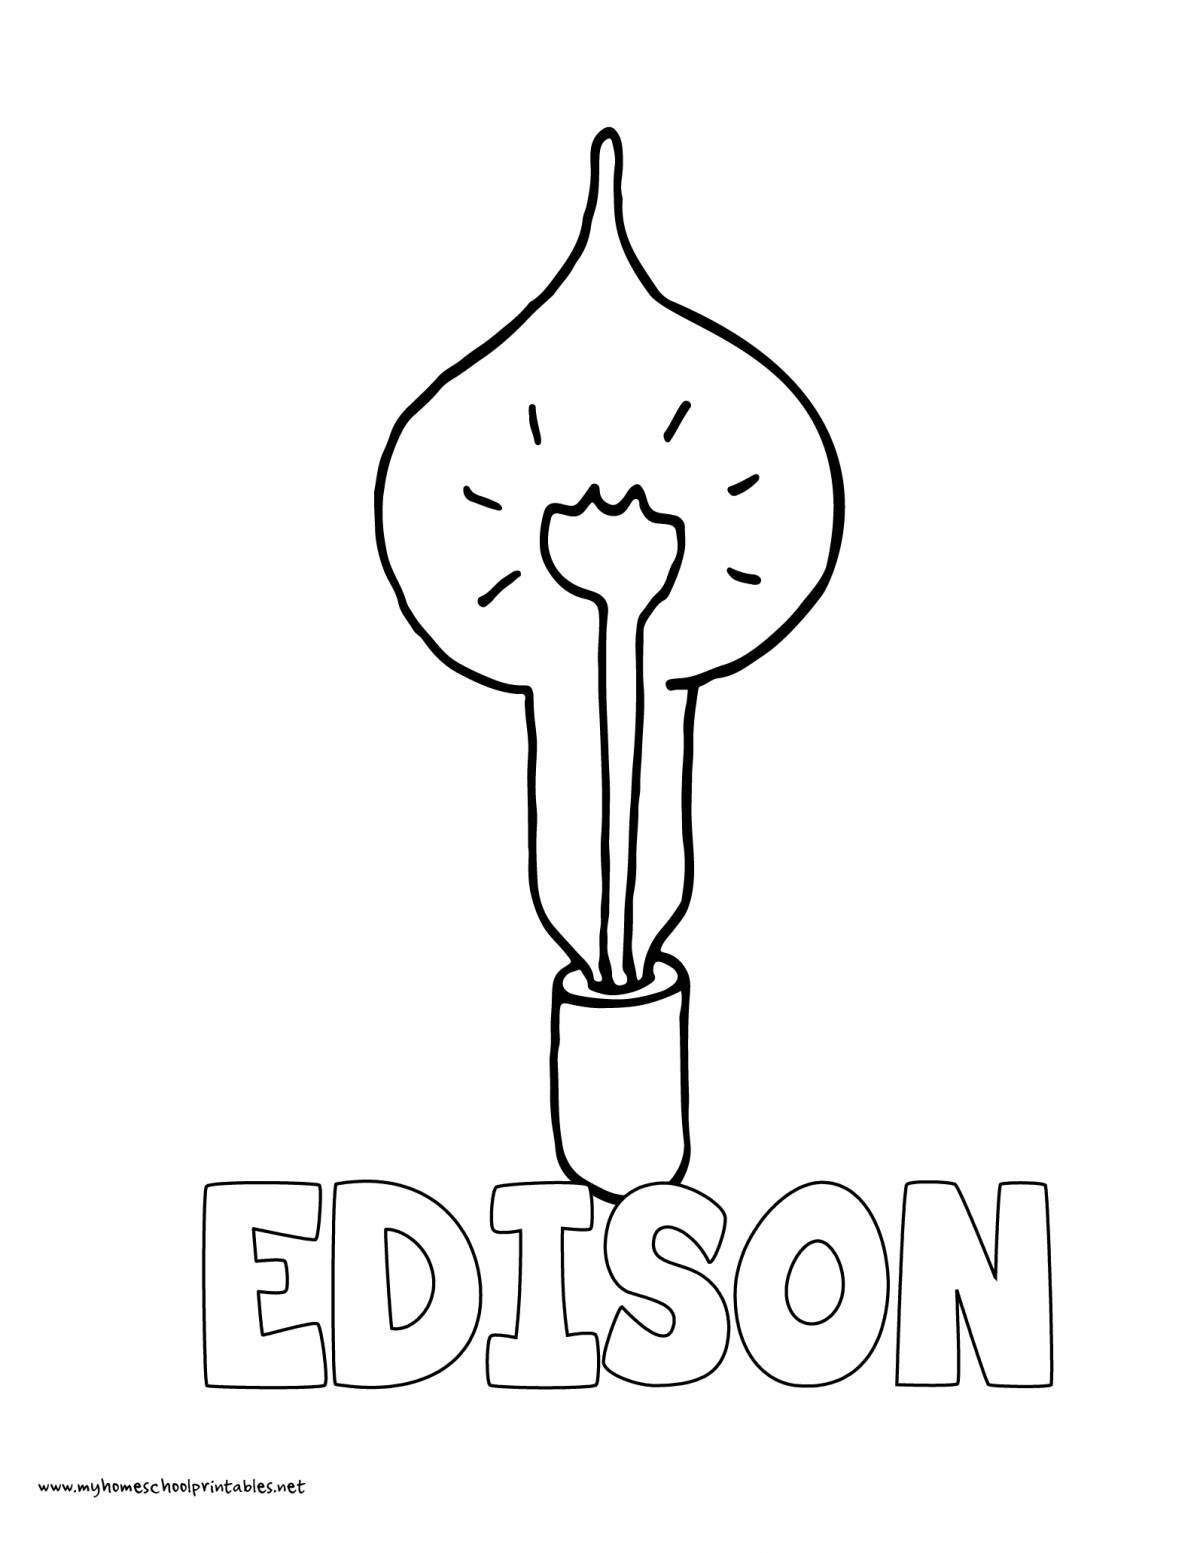 Edison #8